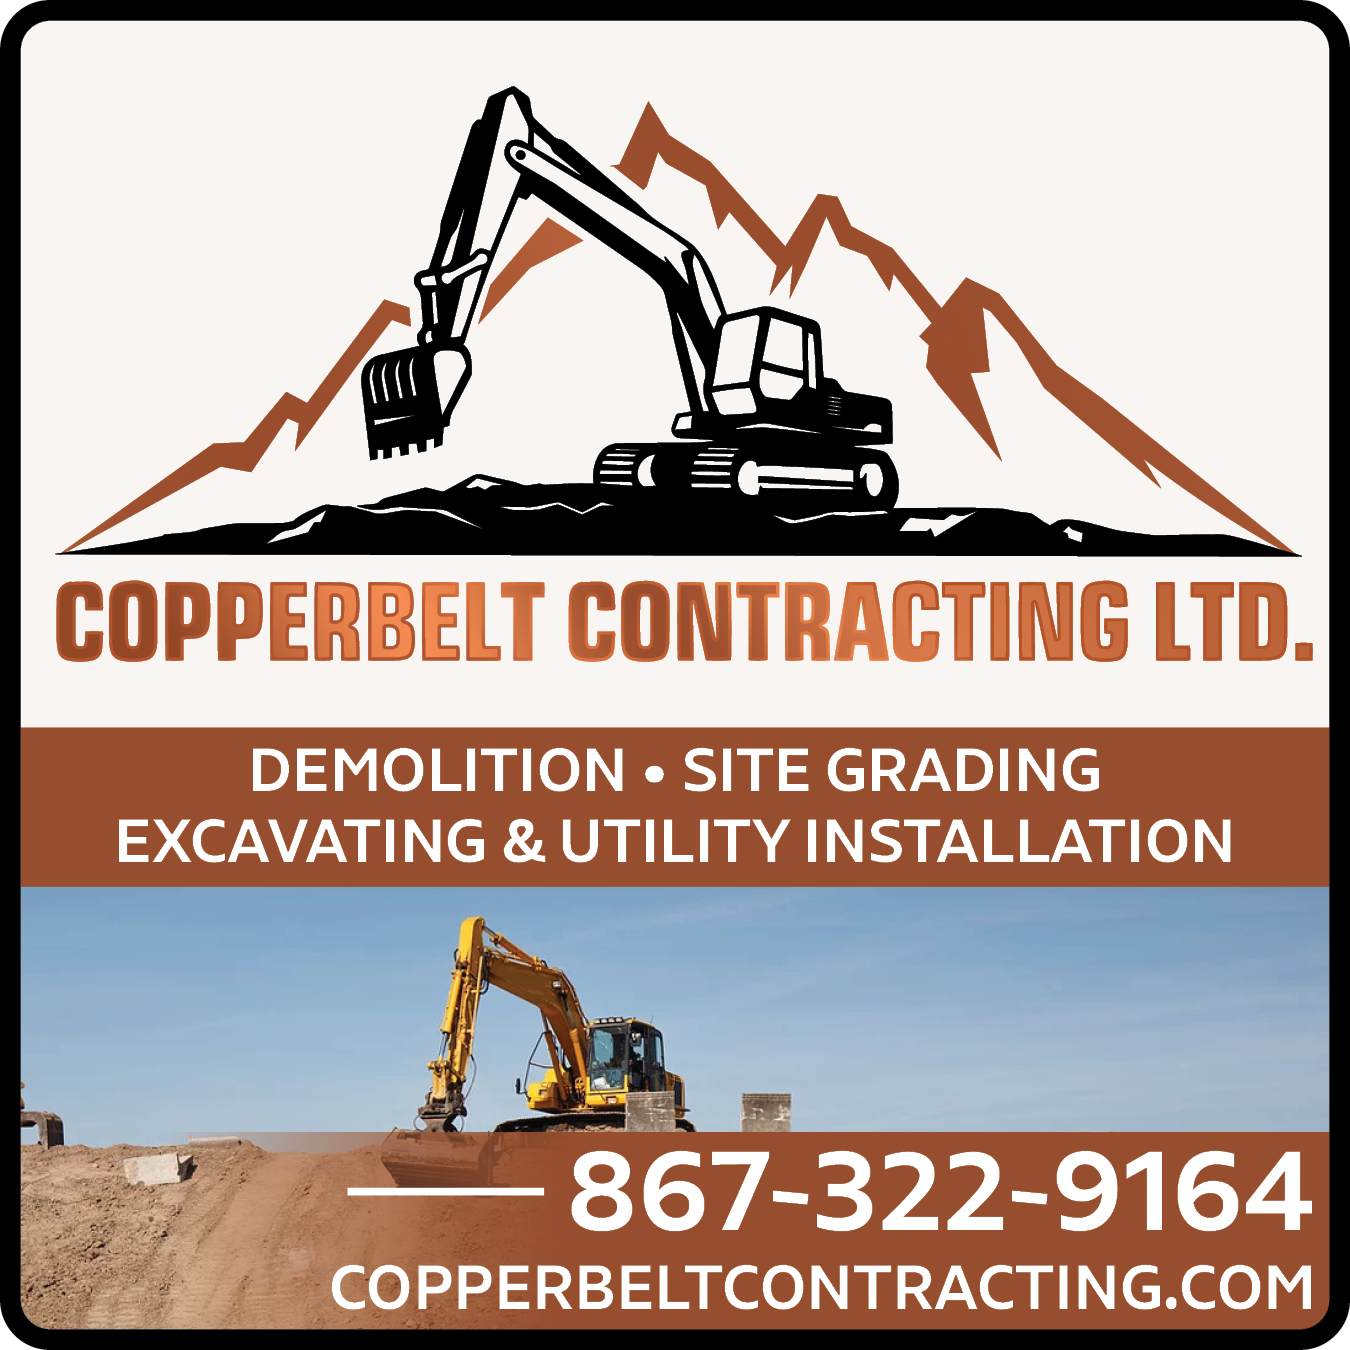 Copperbelt Contracting Ltd.